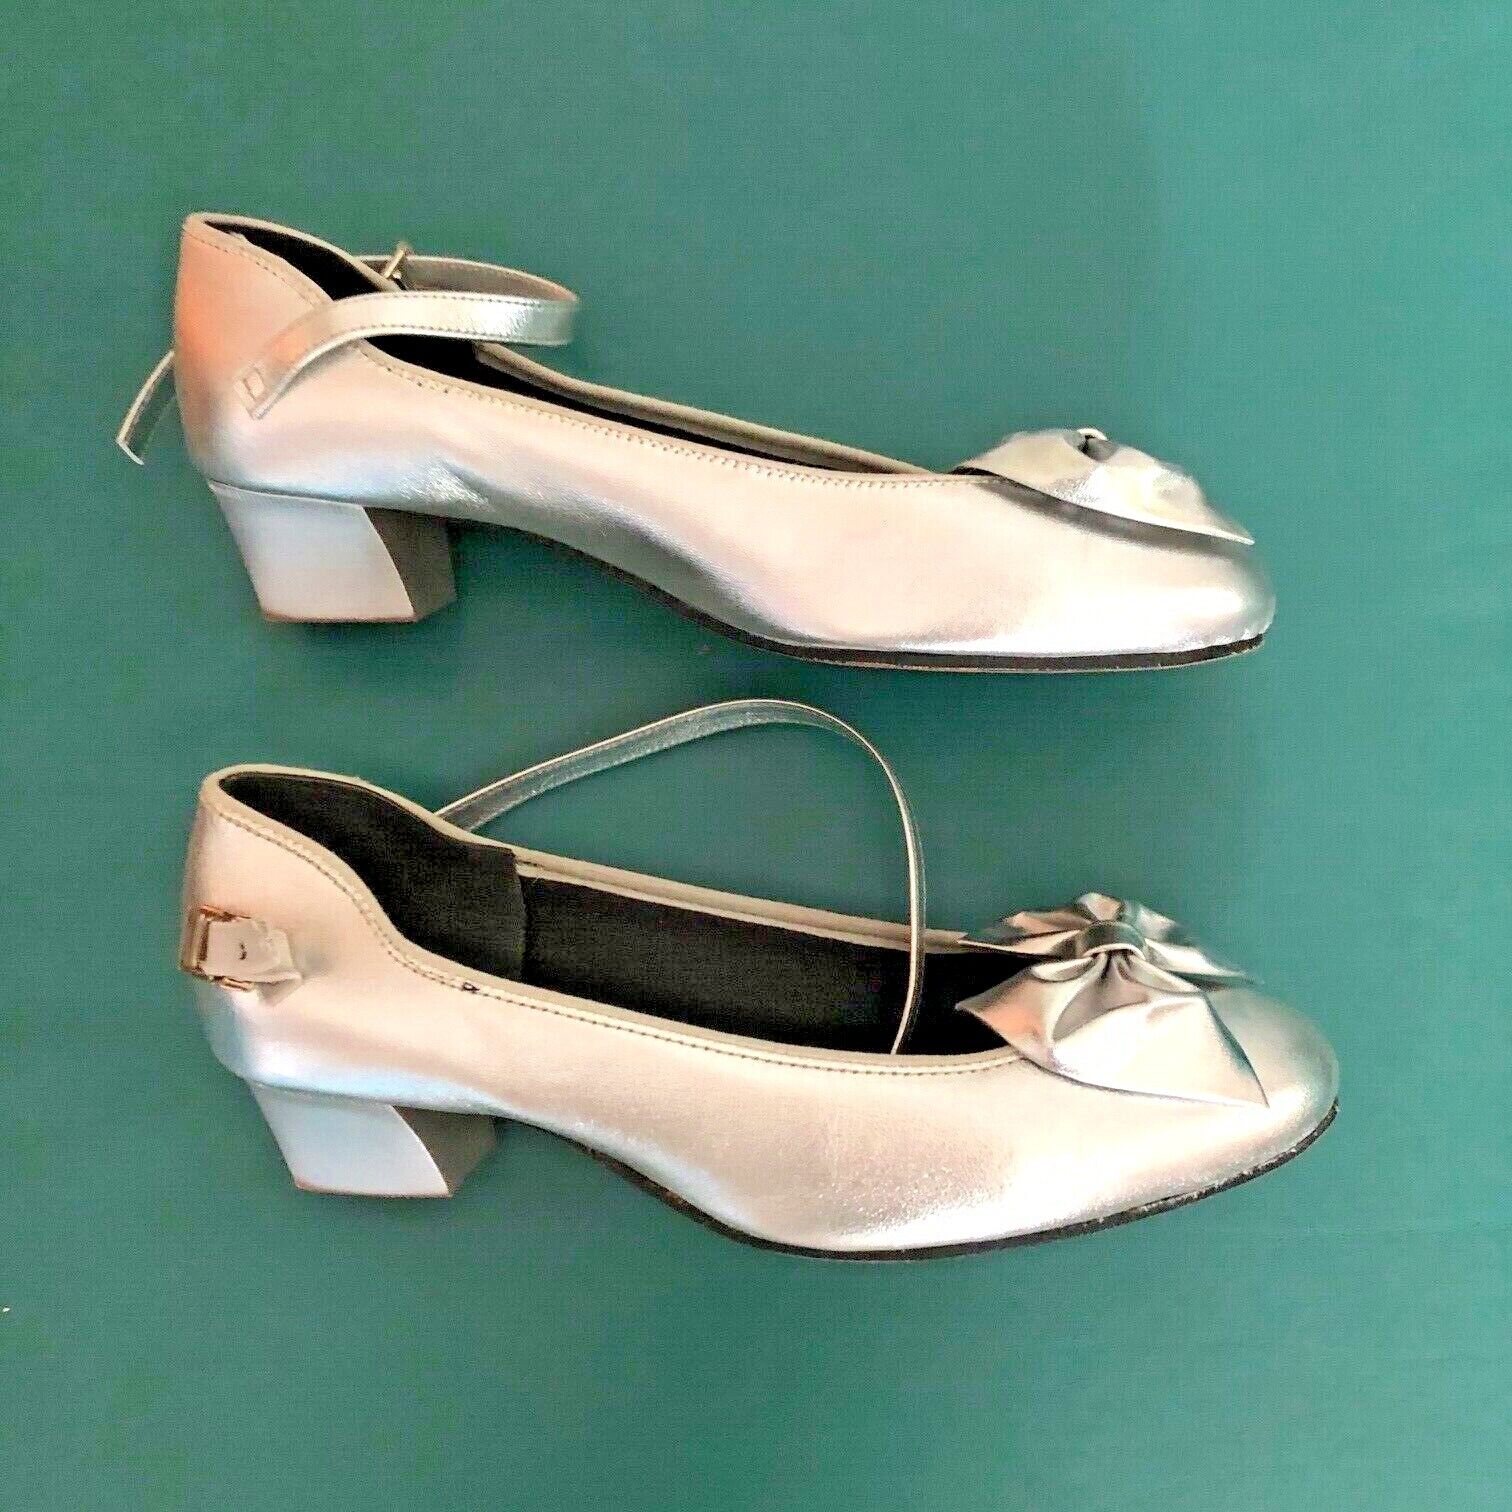 Lot of 7 pairs ladies ballroom dance shoes size 8 Без бренда - фотография #3